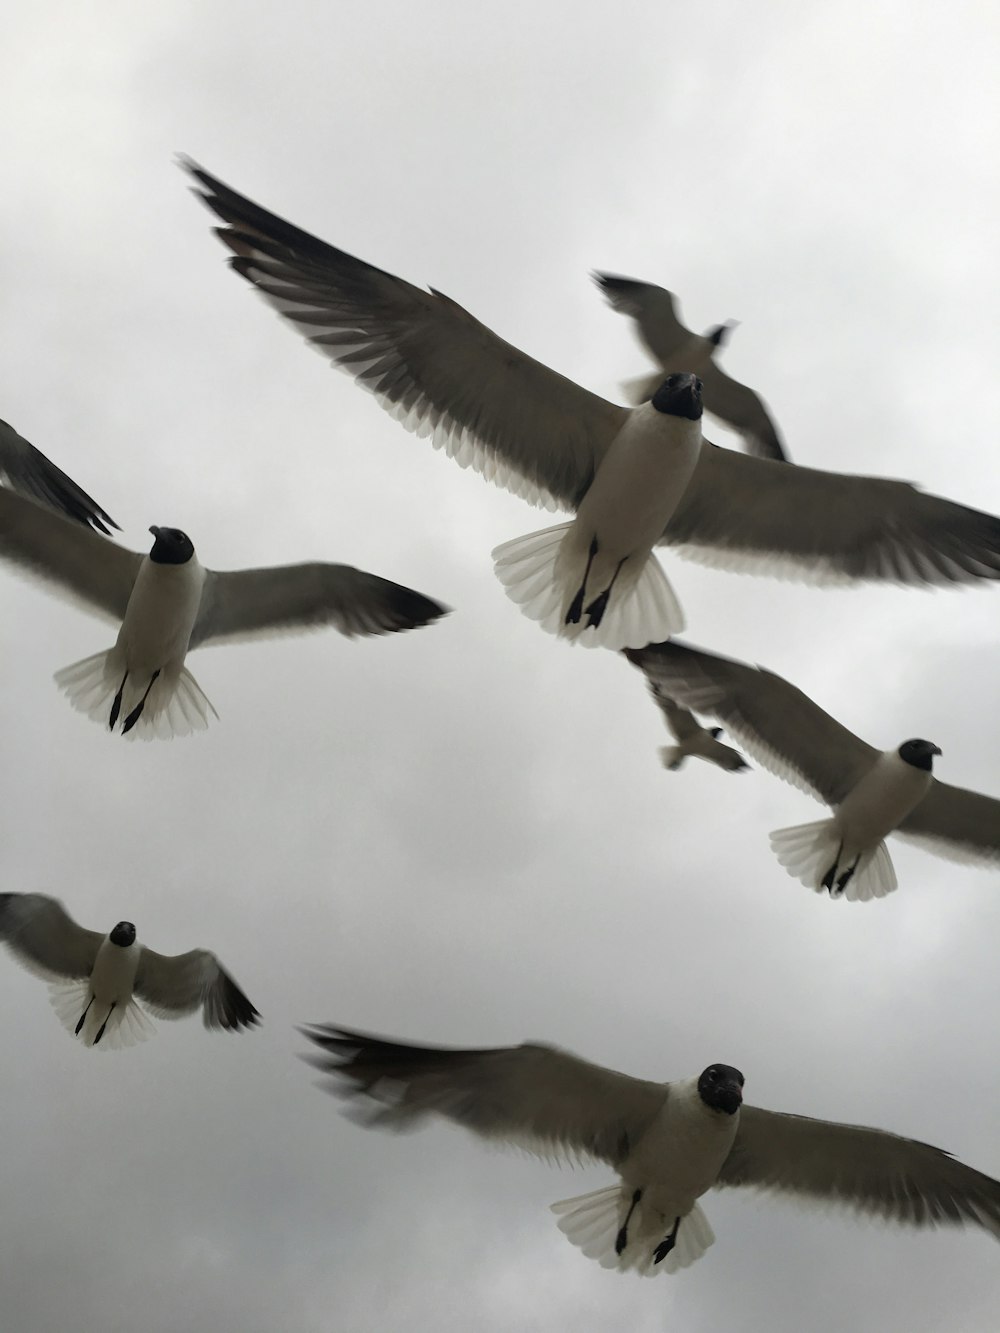 flock of gulls flying under blue sky during daytime